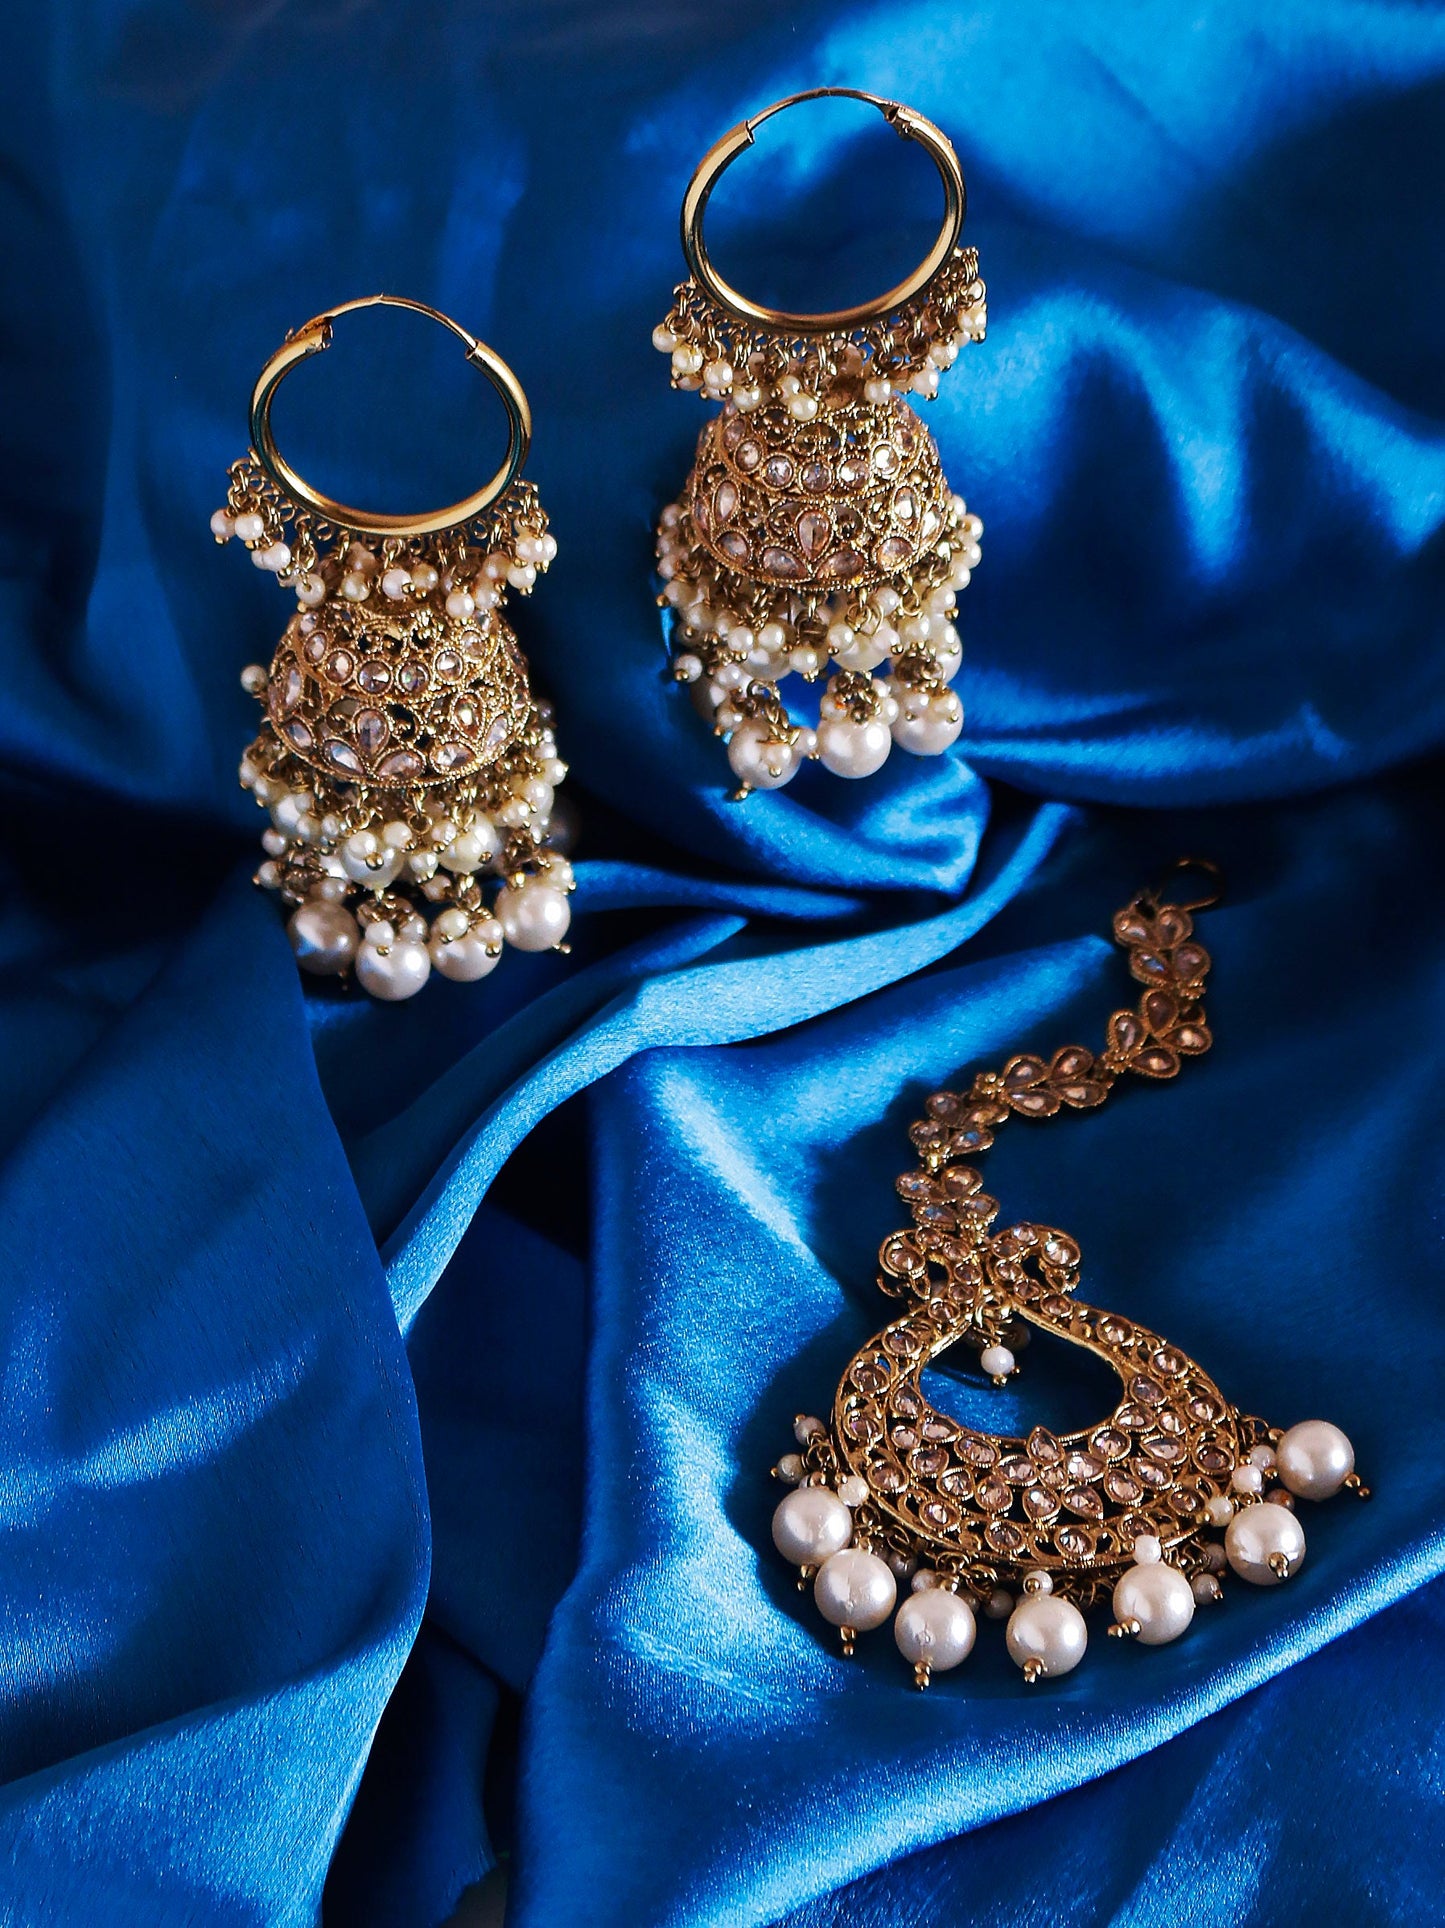 Swisni Alloy Golden Jhumki Earrings with with , Maang Tikka White Beads For Women|For Girls|Gifting|Anniversary|Birthday|Girlfriend